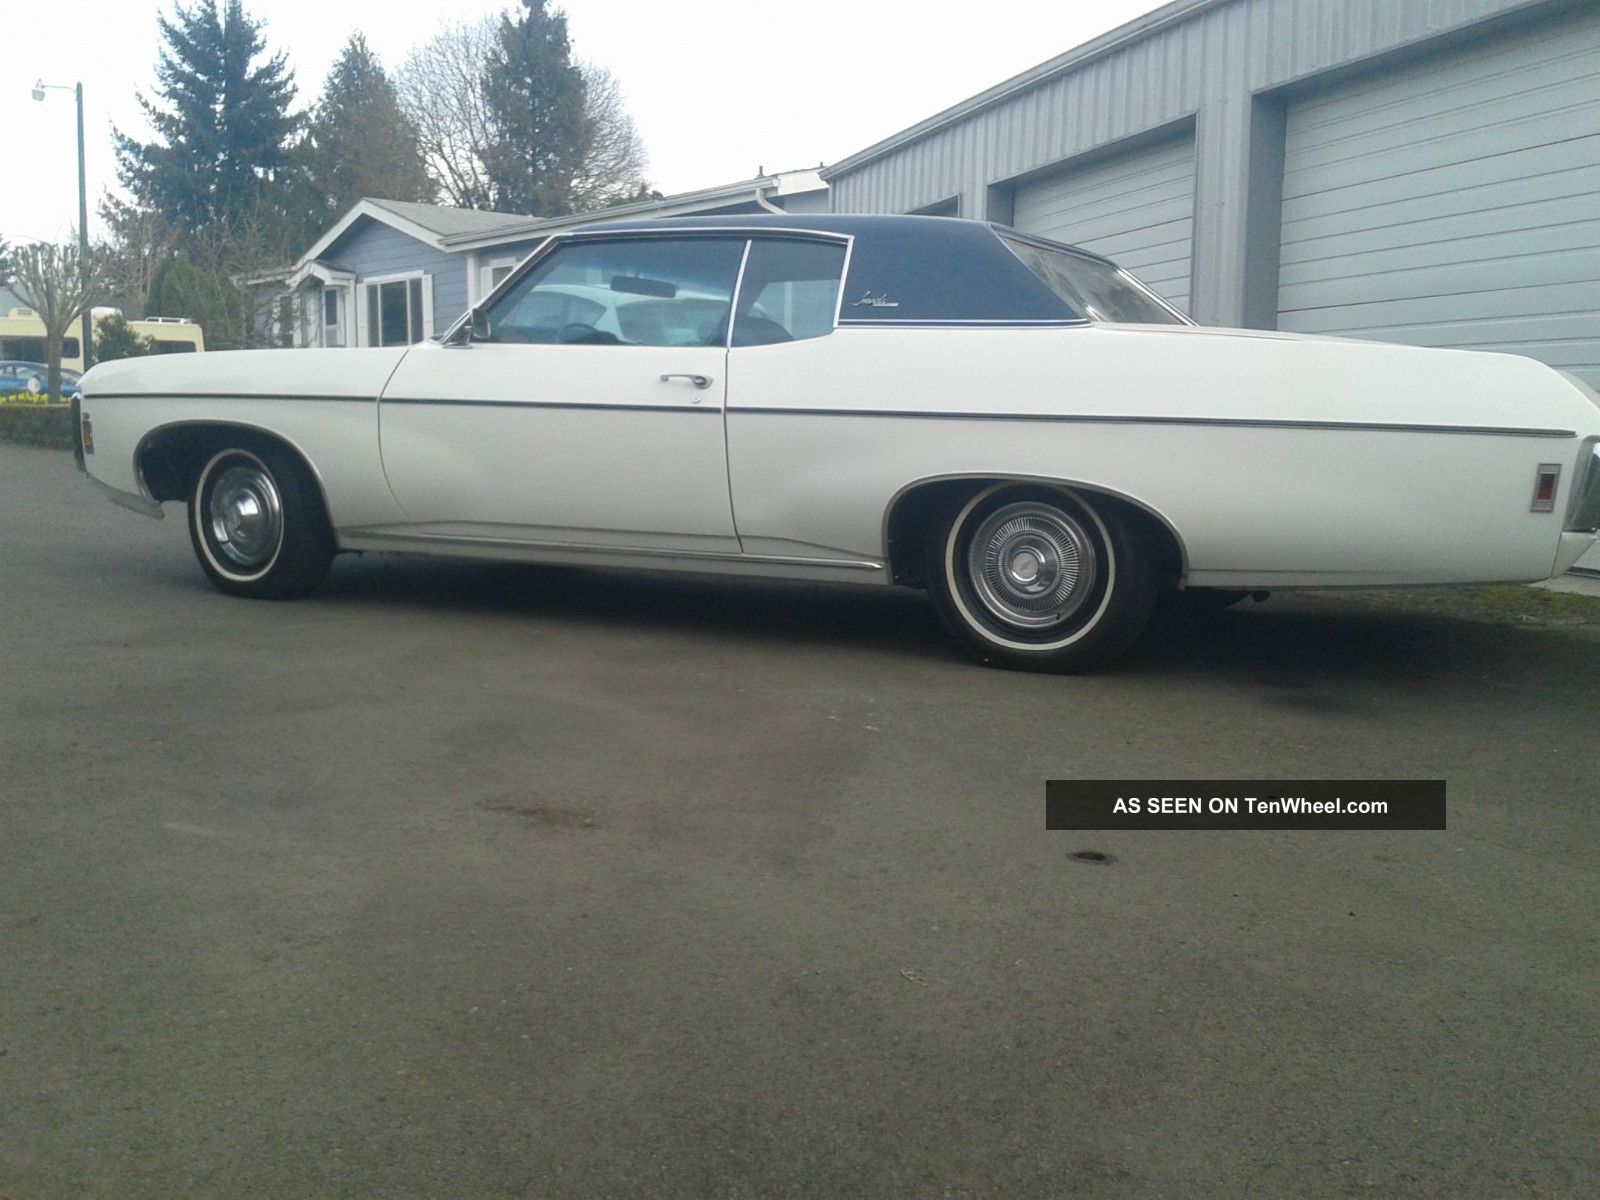 1971 Impala Convertible For Sale On Craigslist | Joy ...